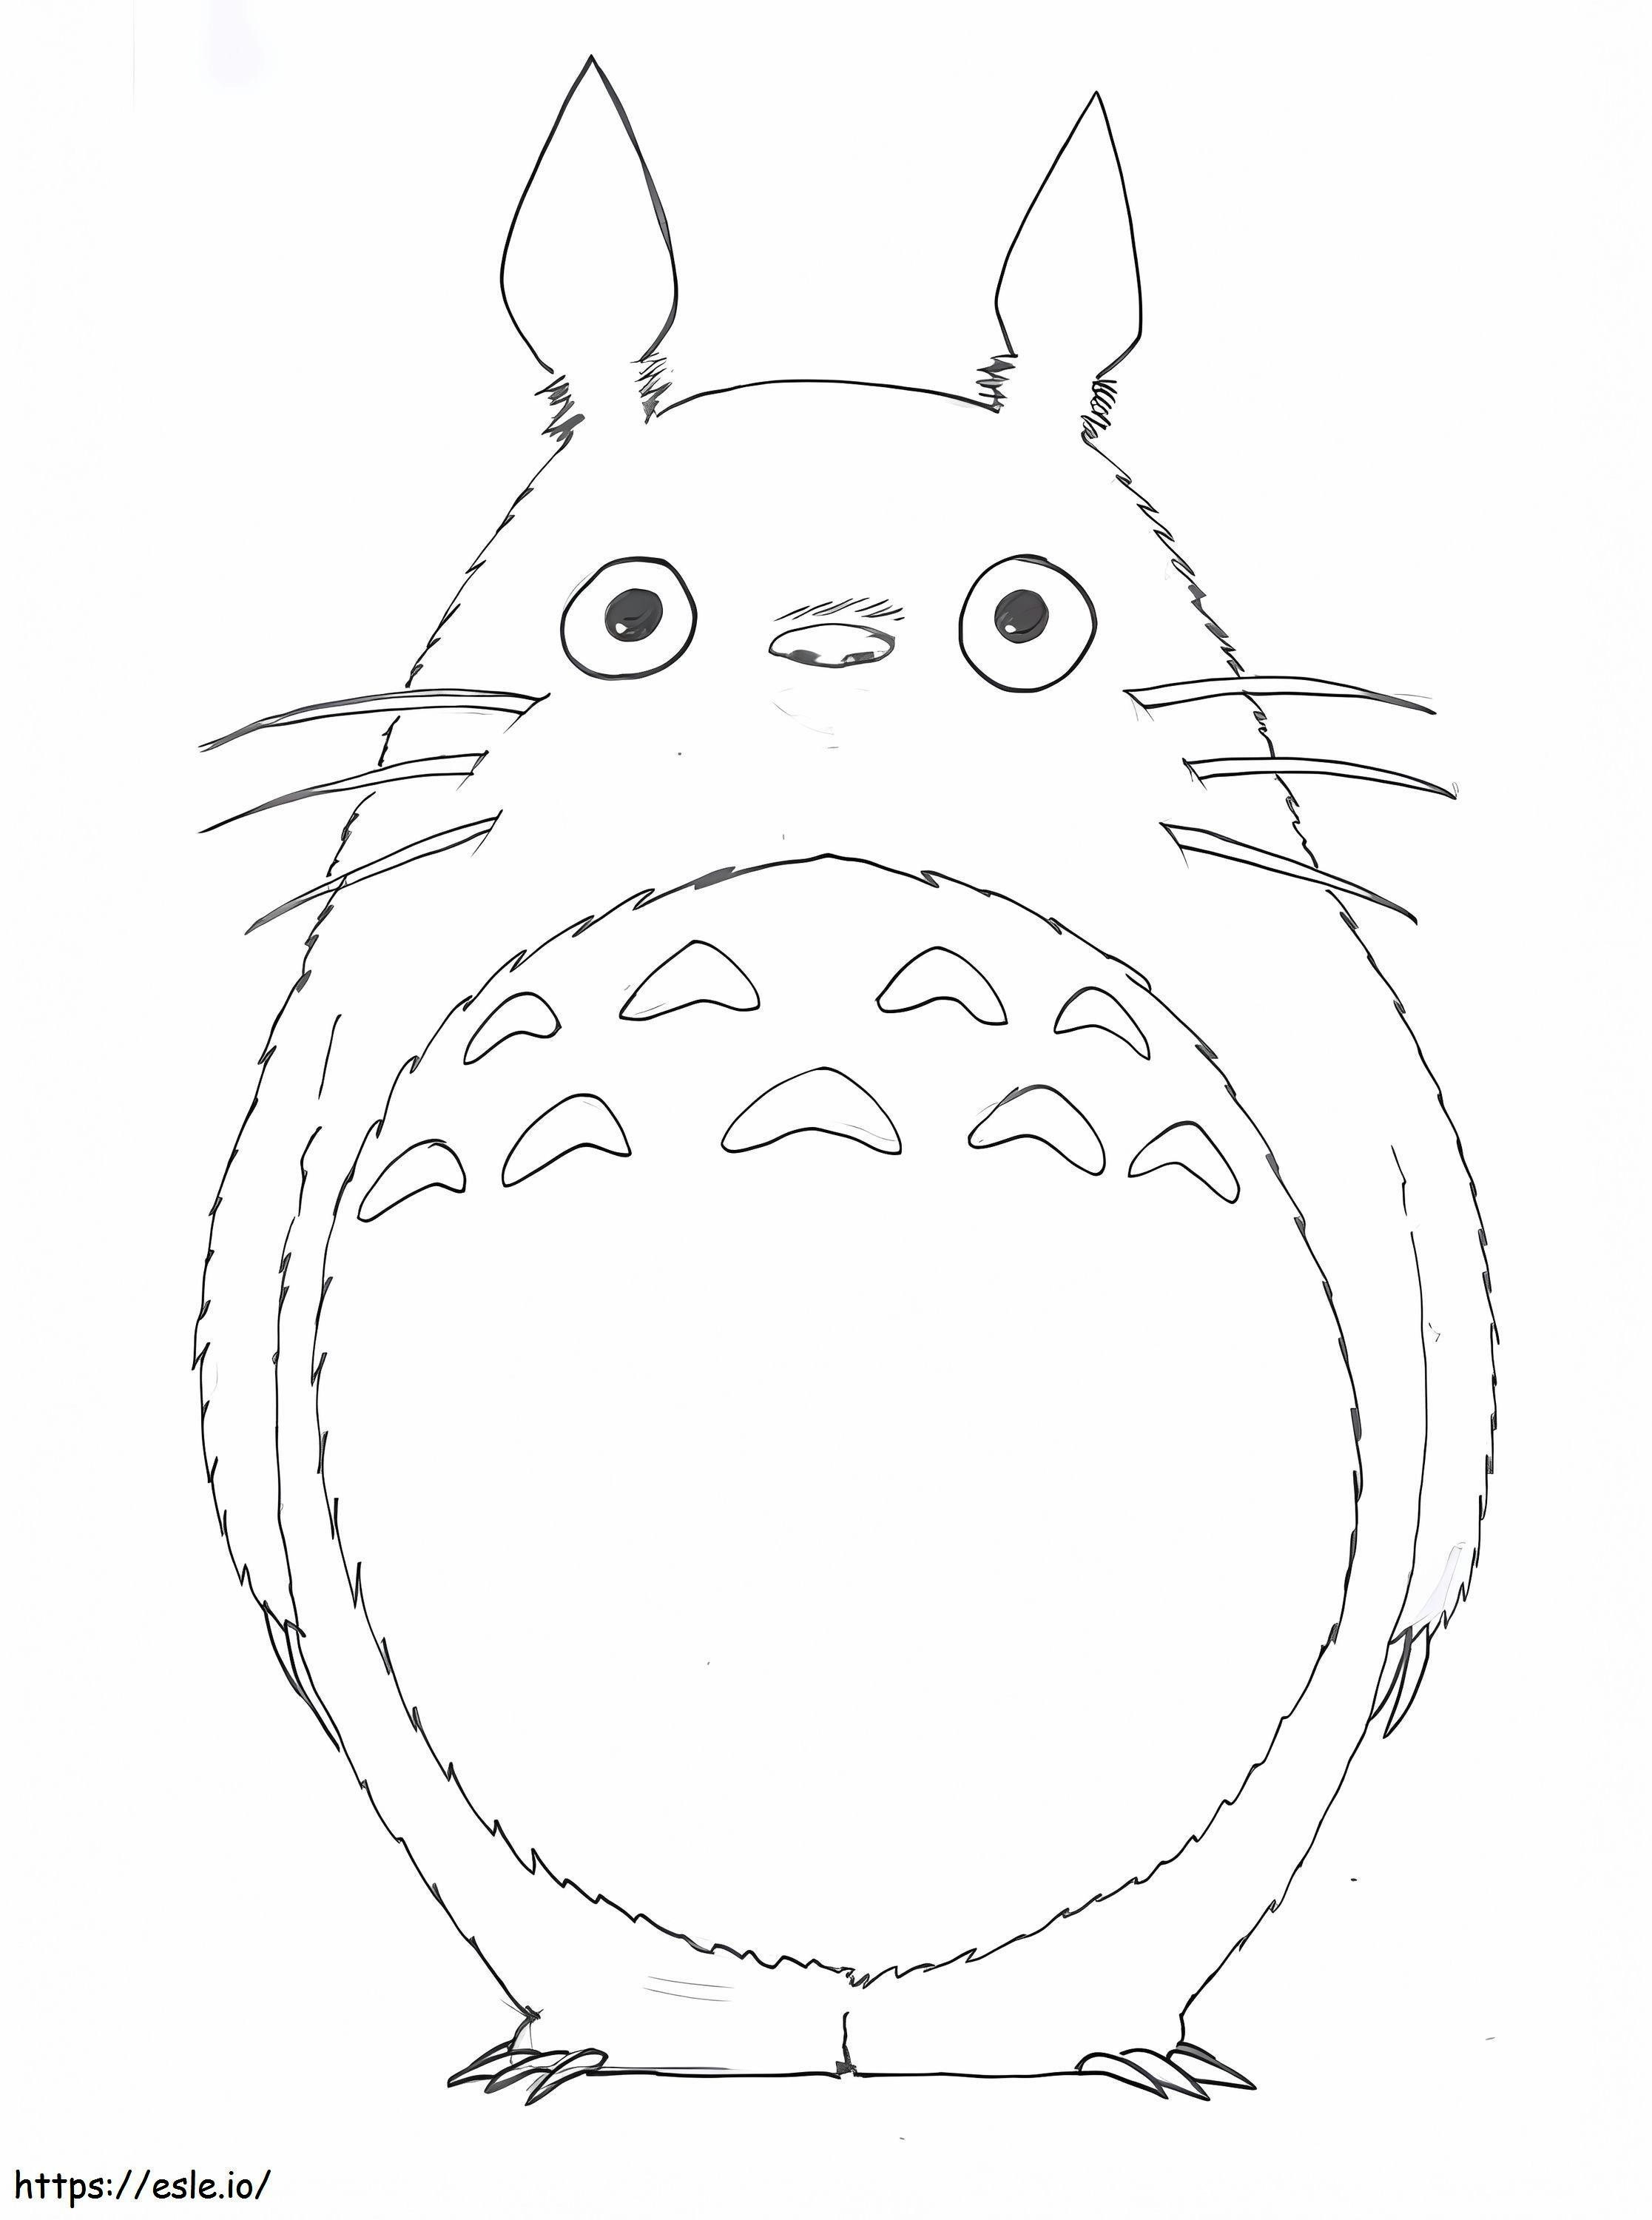 Lustiger Totoro ausmalbilder